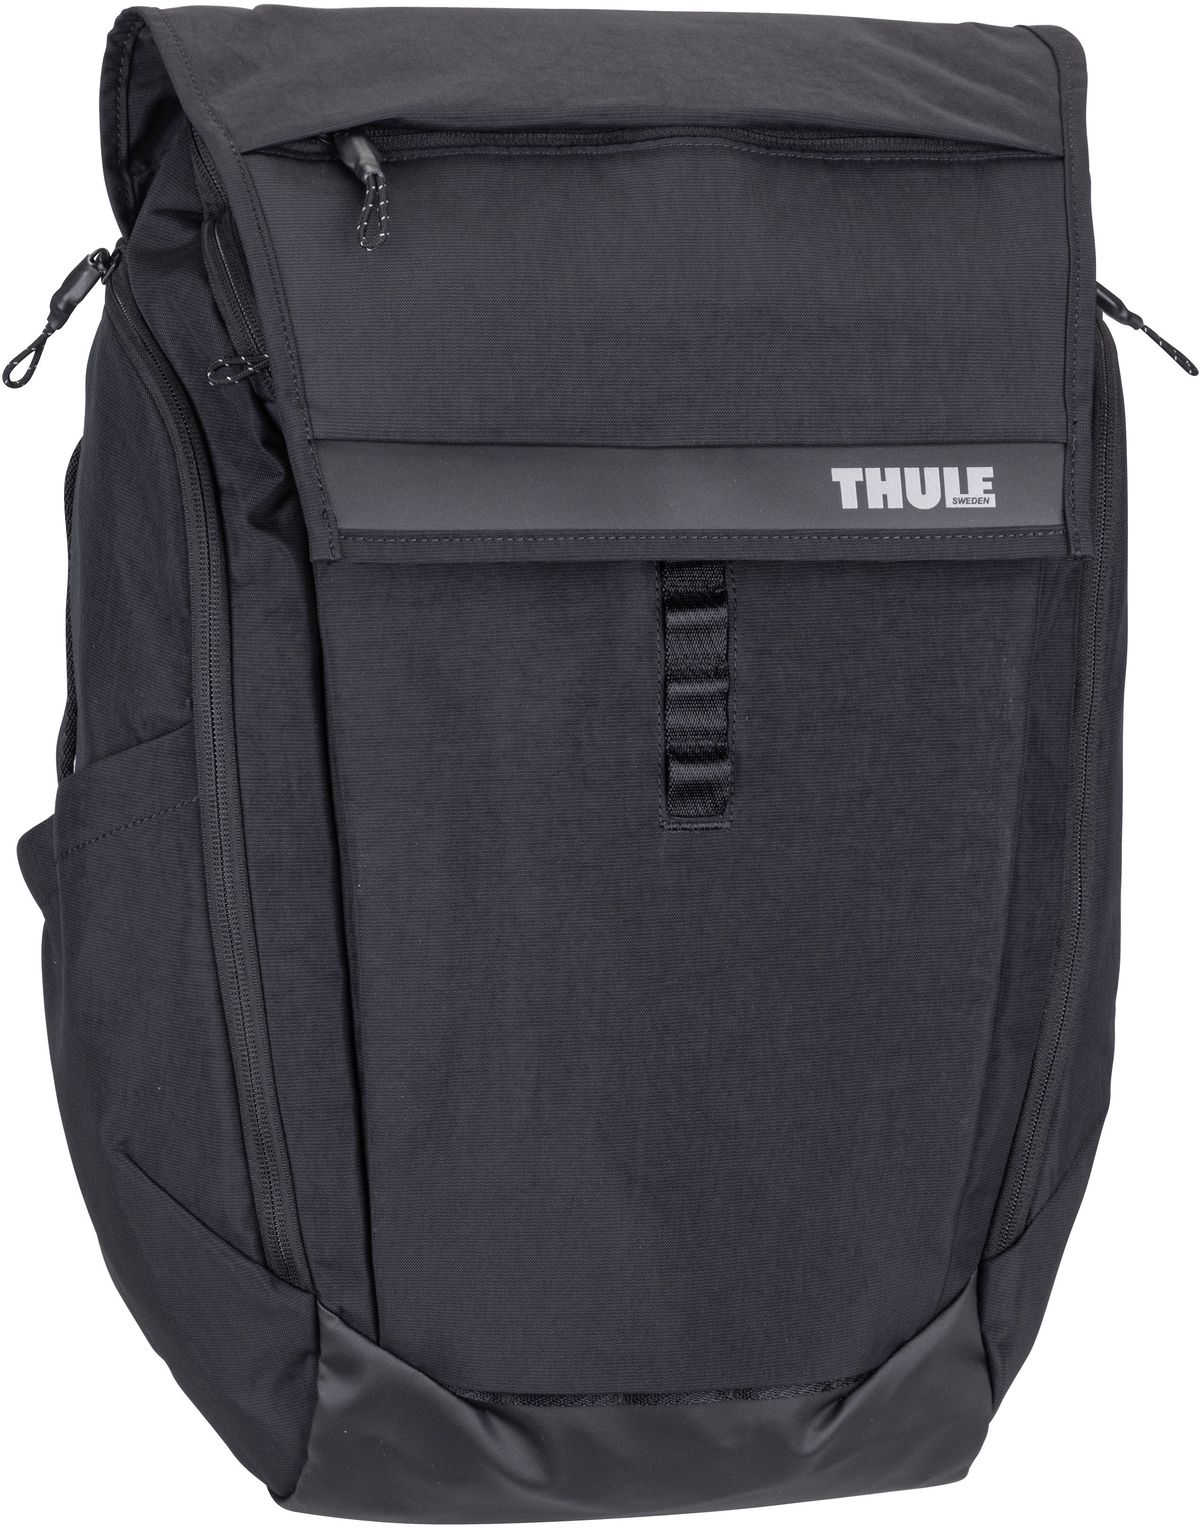 Thule Paramount 3 Backpack 27L  in Black (27 Liter), Rucksack / Backpack